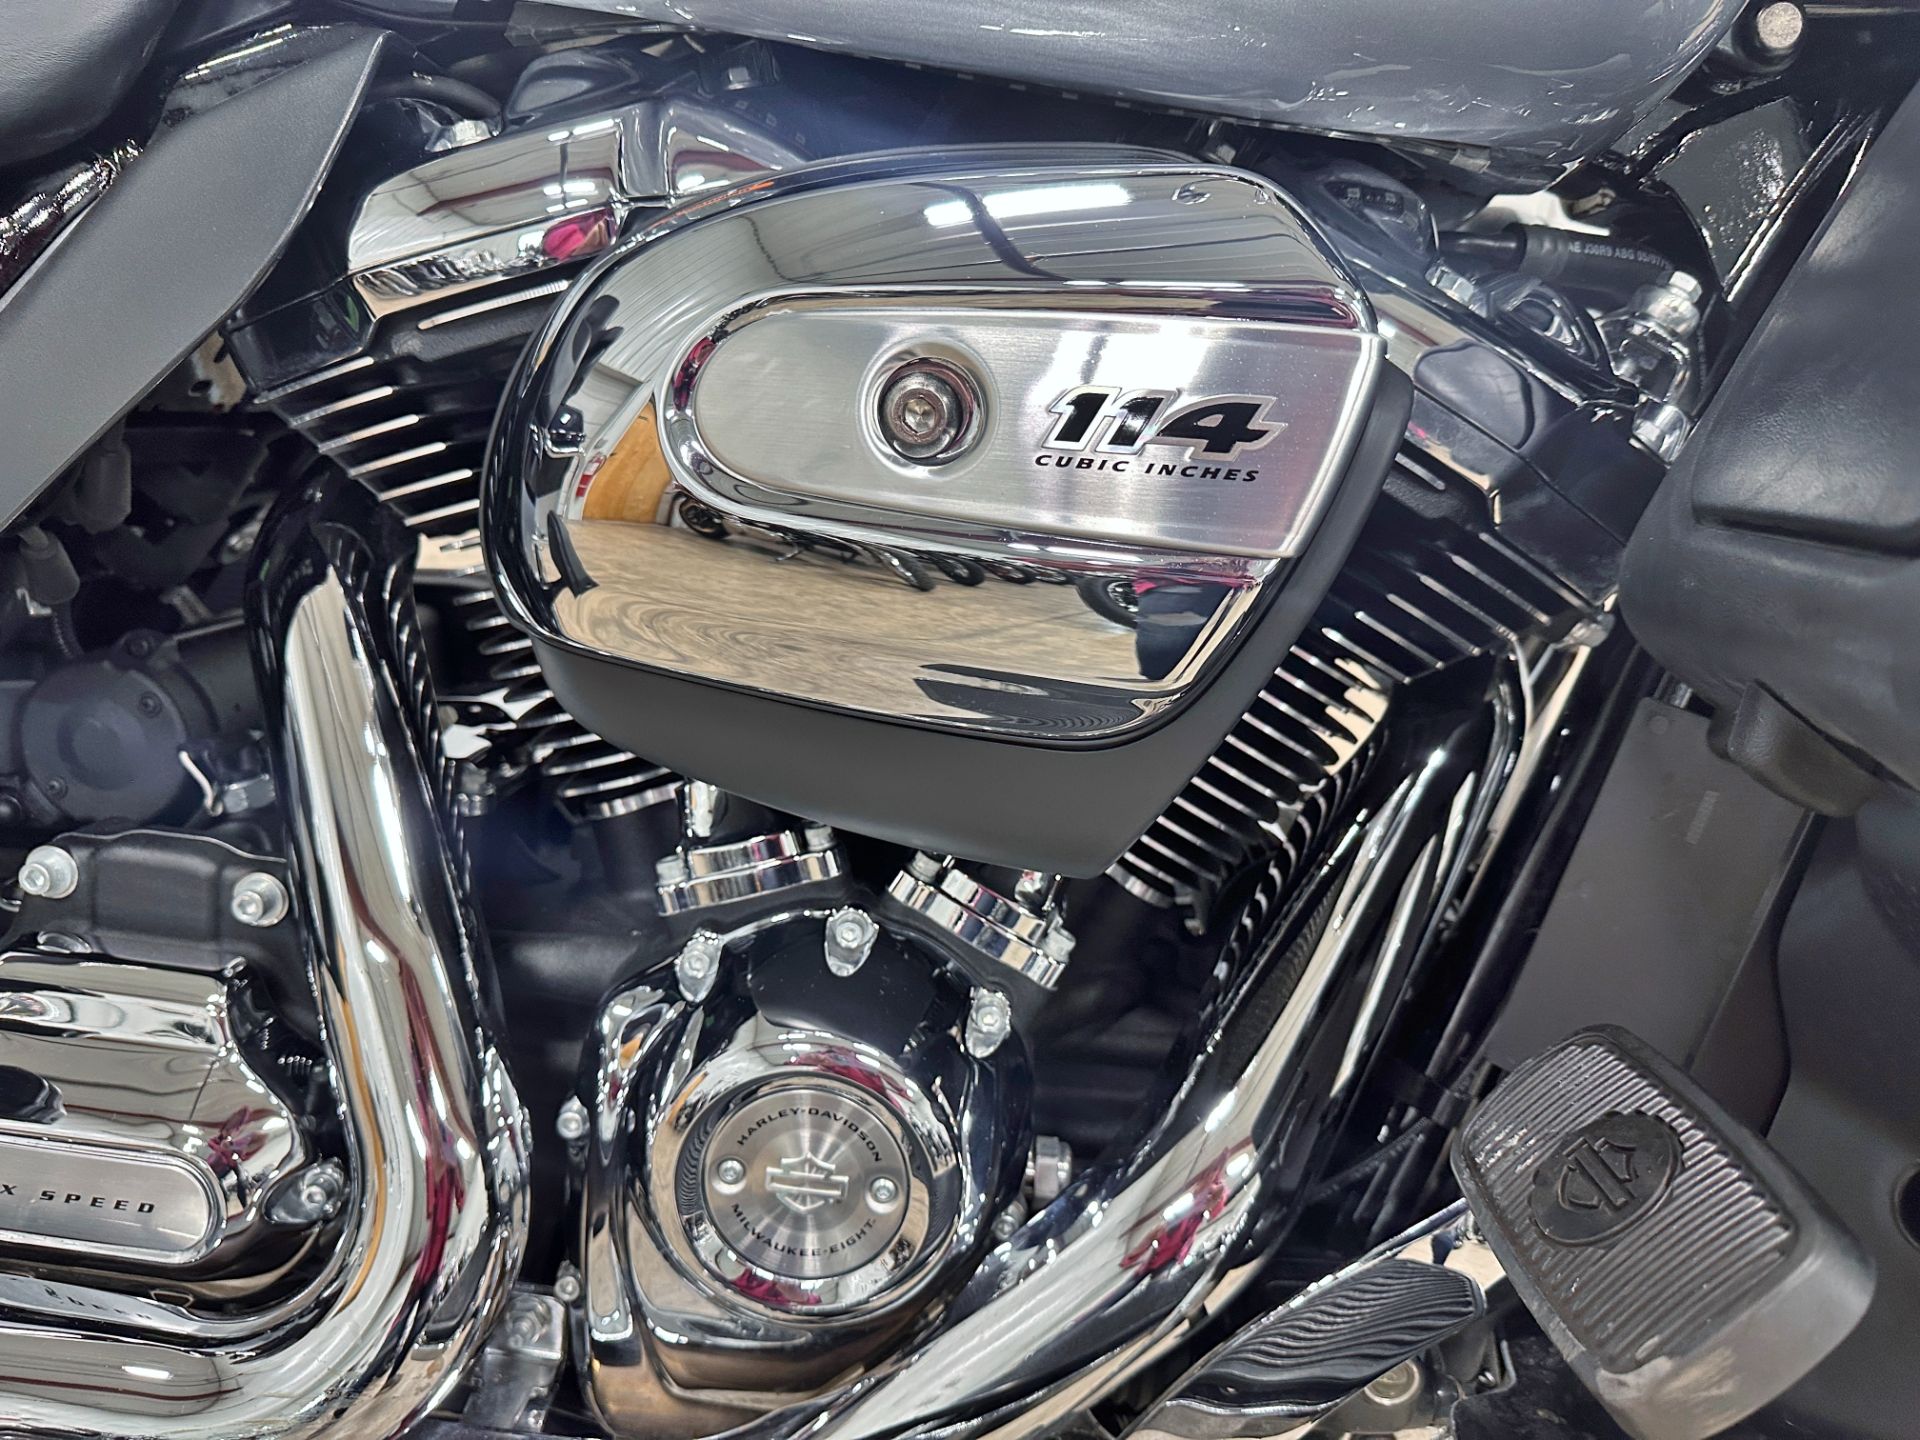 2019 Harley-Davidson Ultra Limited in Sandusky, Ohio - Photo 2